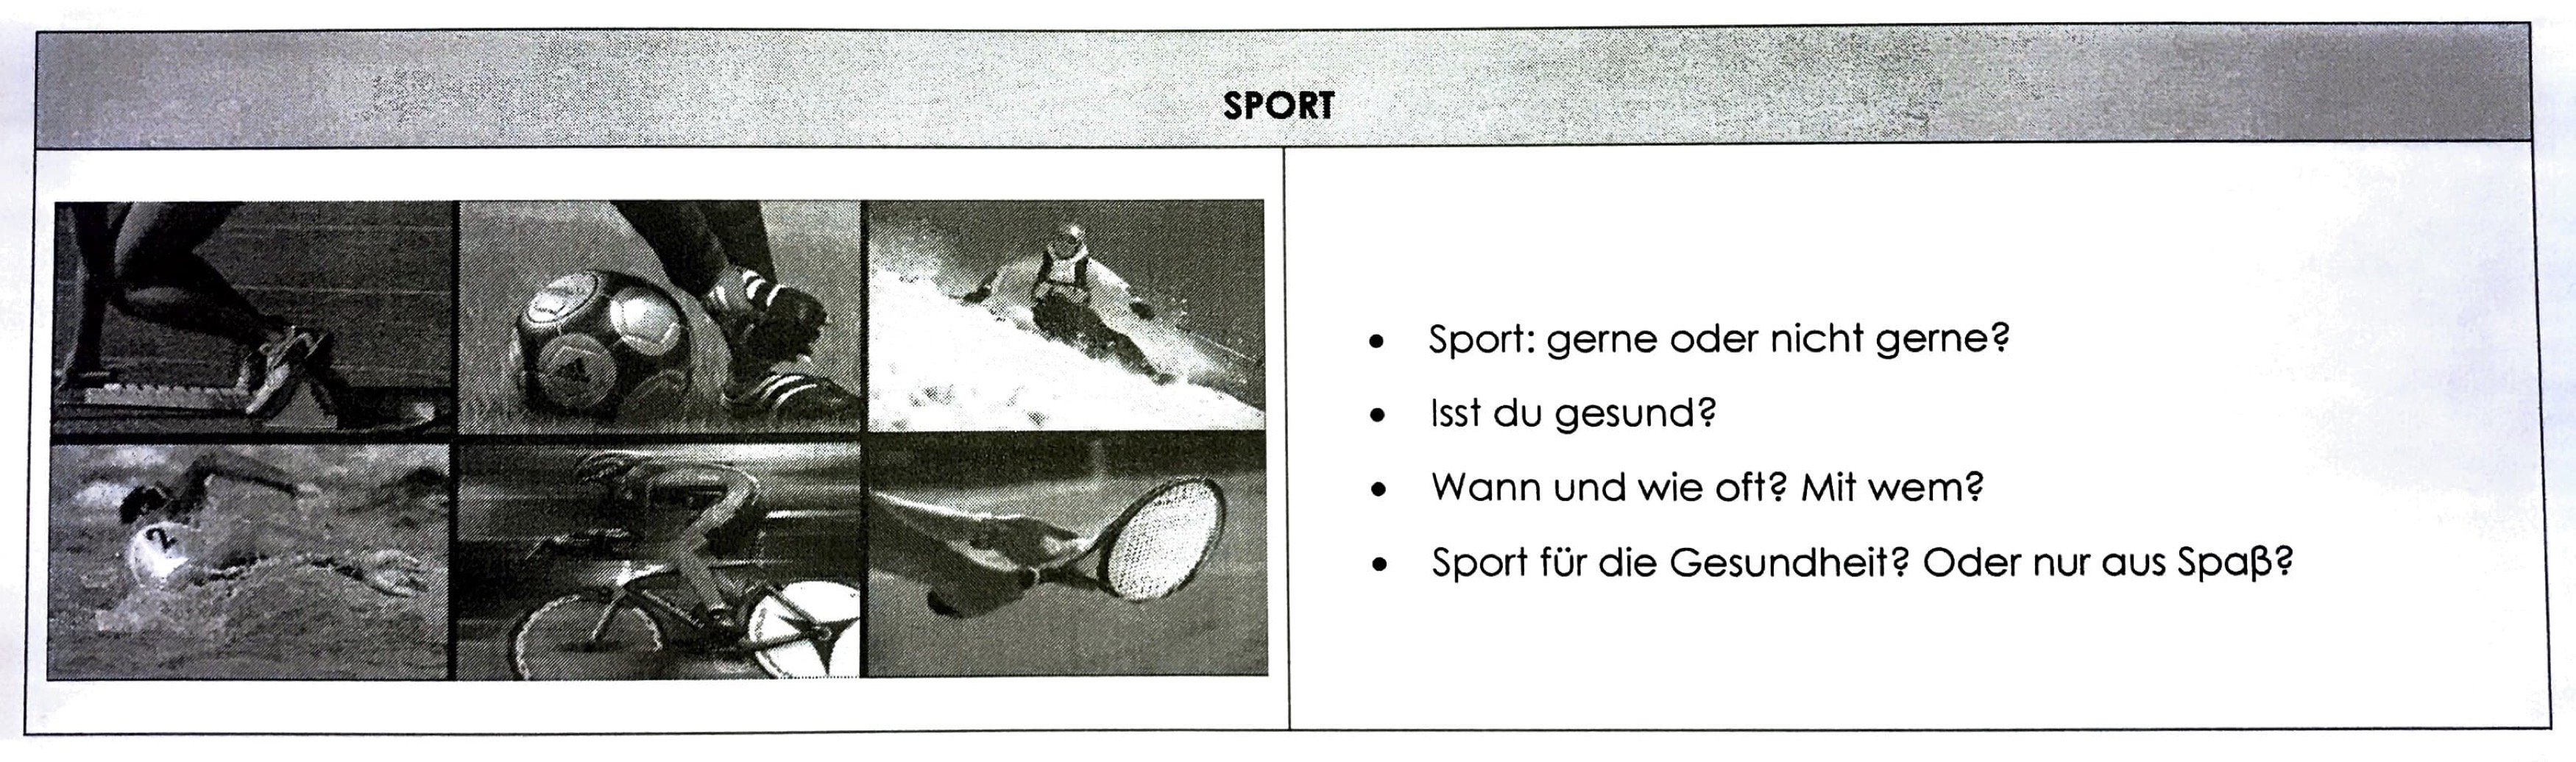 Sport20-2